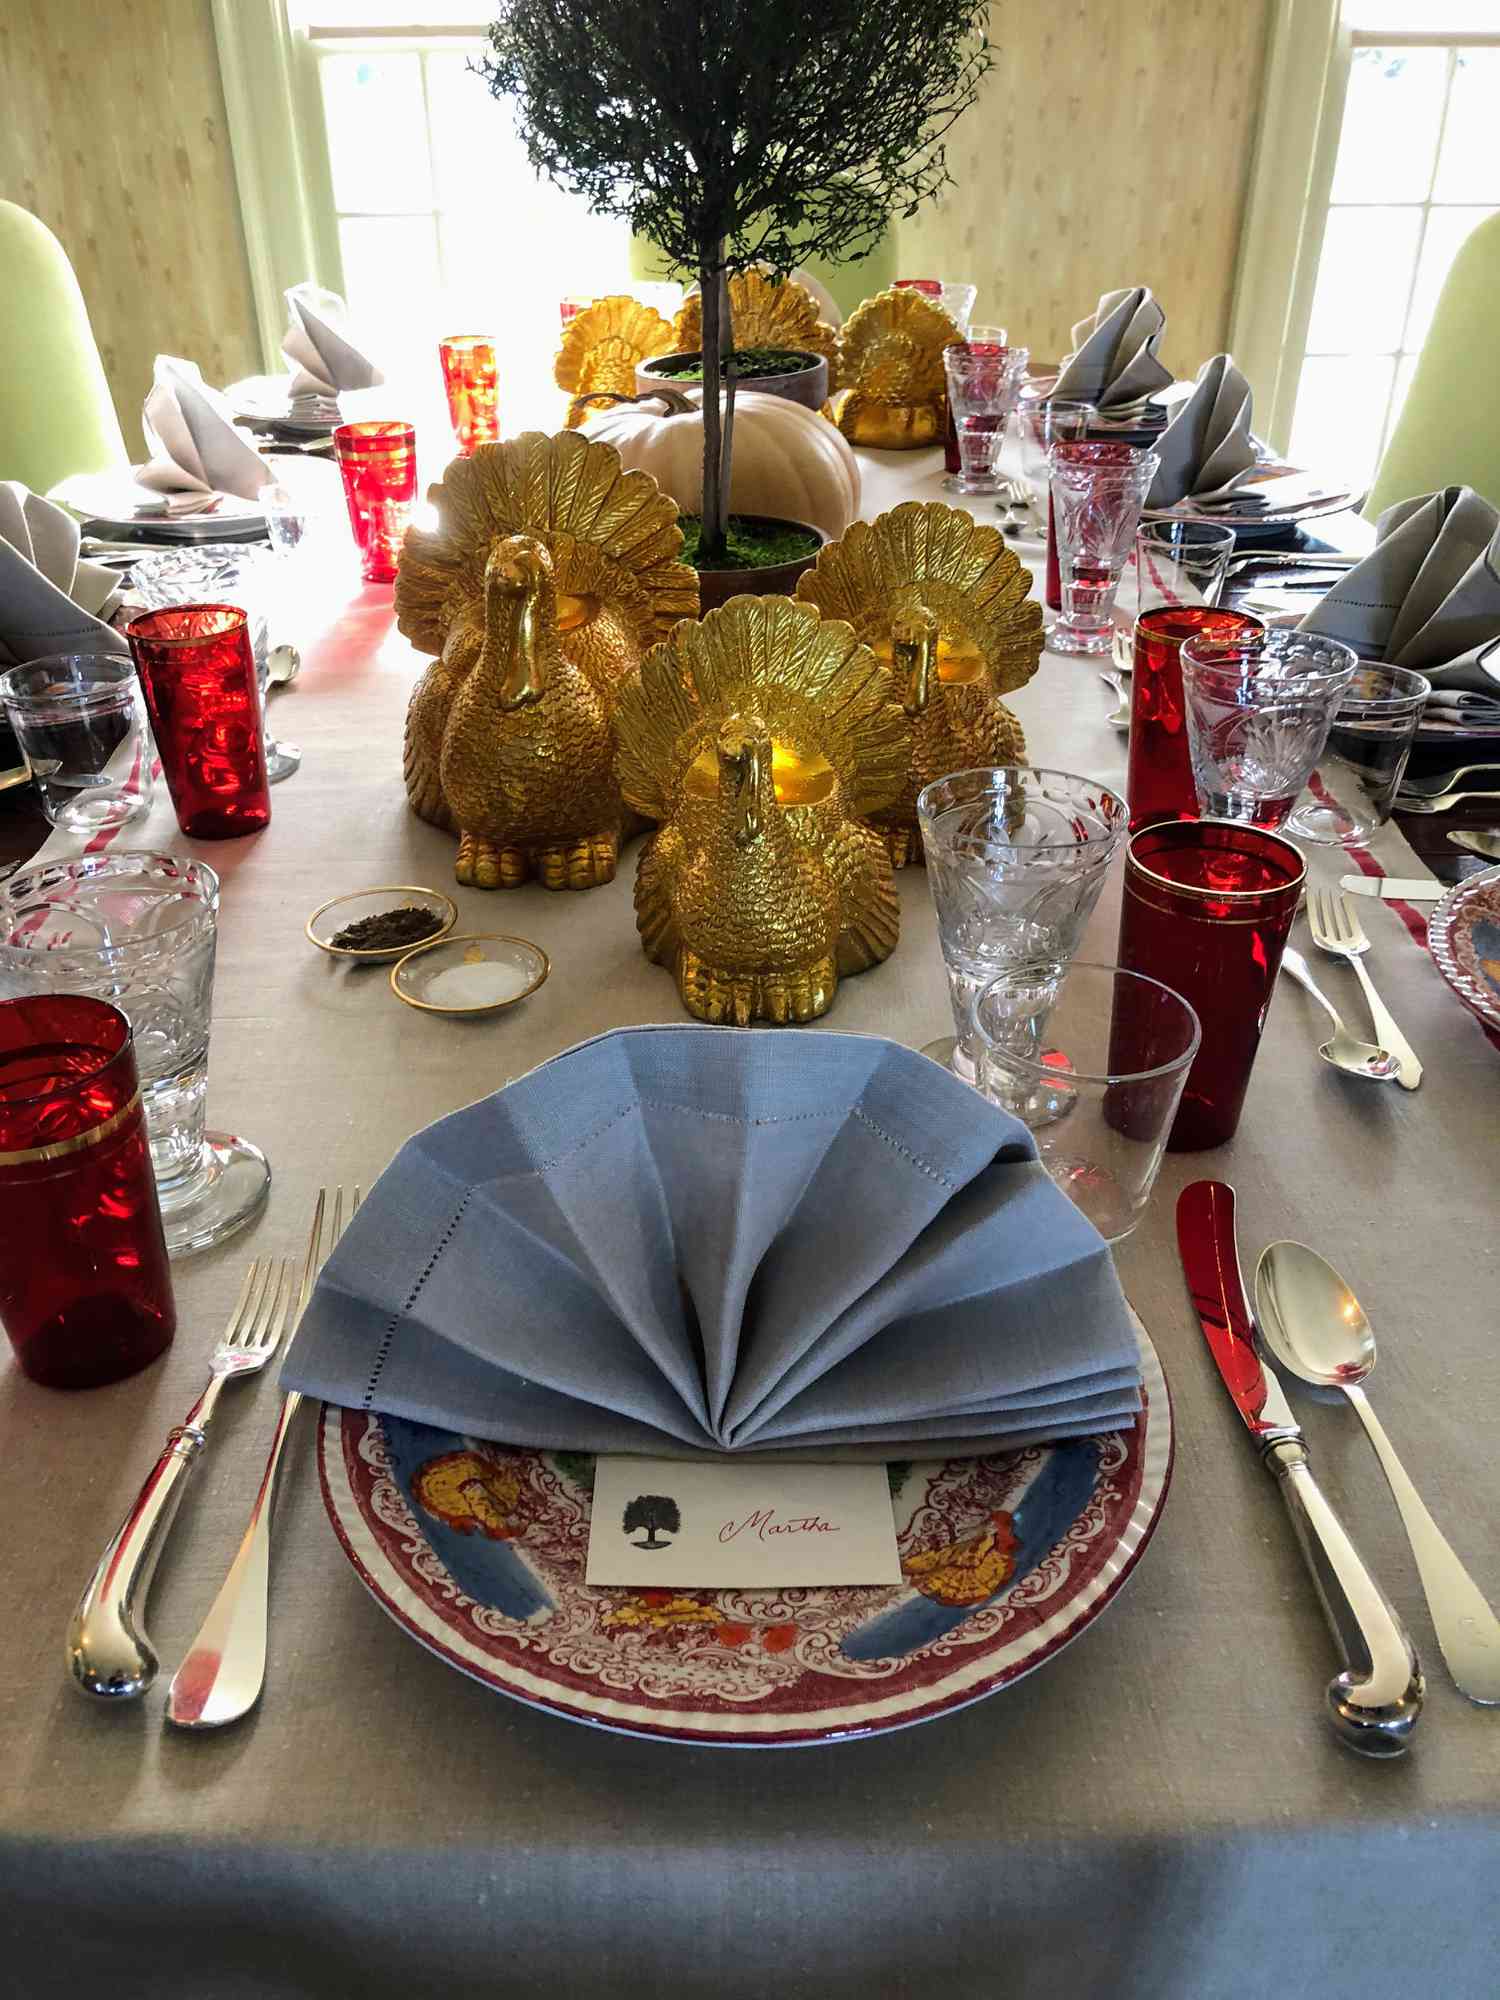 A Thanksgiving table setting at Martha Stewart's house.